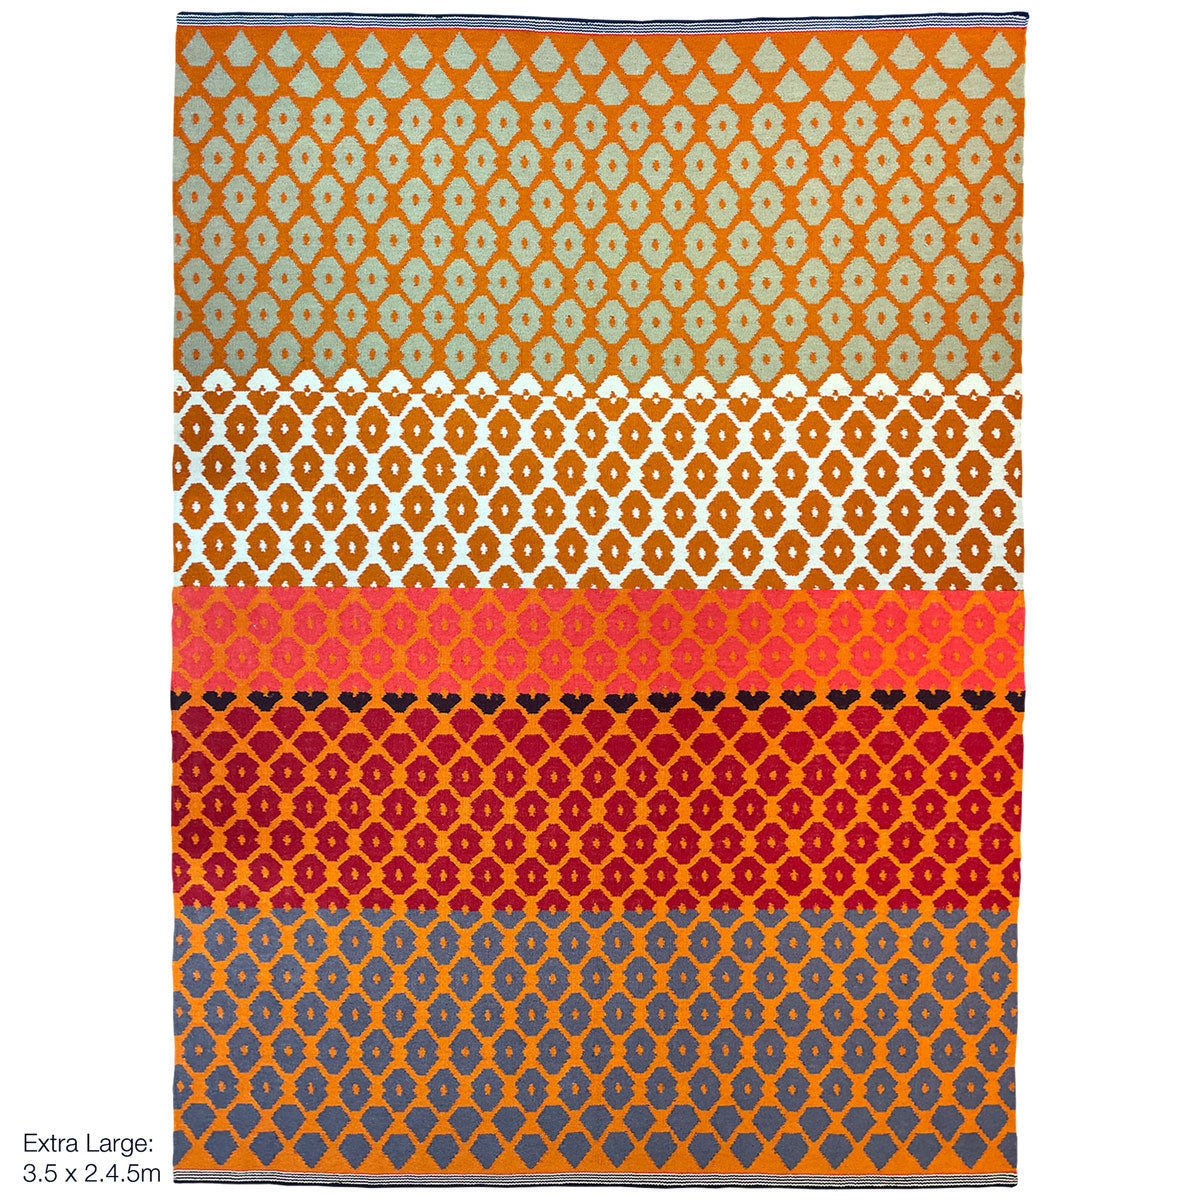 Geometric pattern, colourful rugs, designer rugs, luxury rugs, wool rugs, geometric rug, modern rug, orange rug, red rug